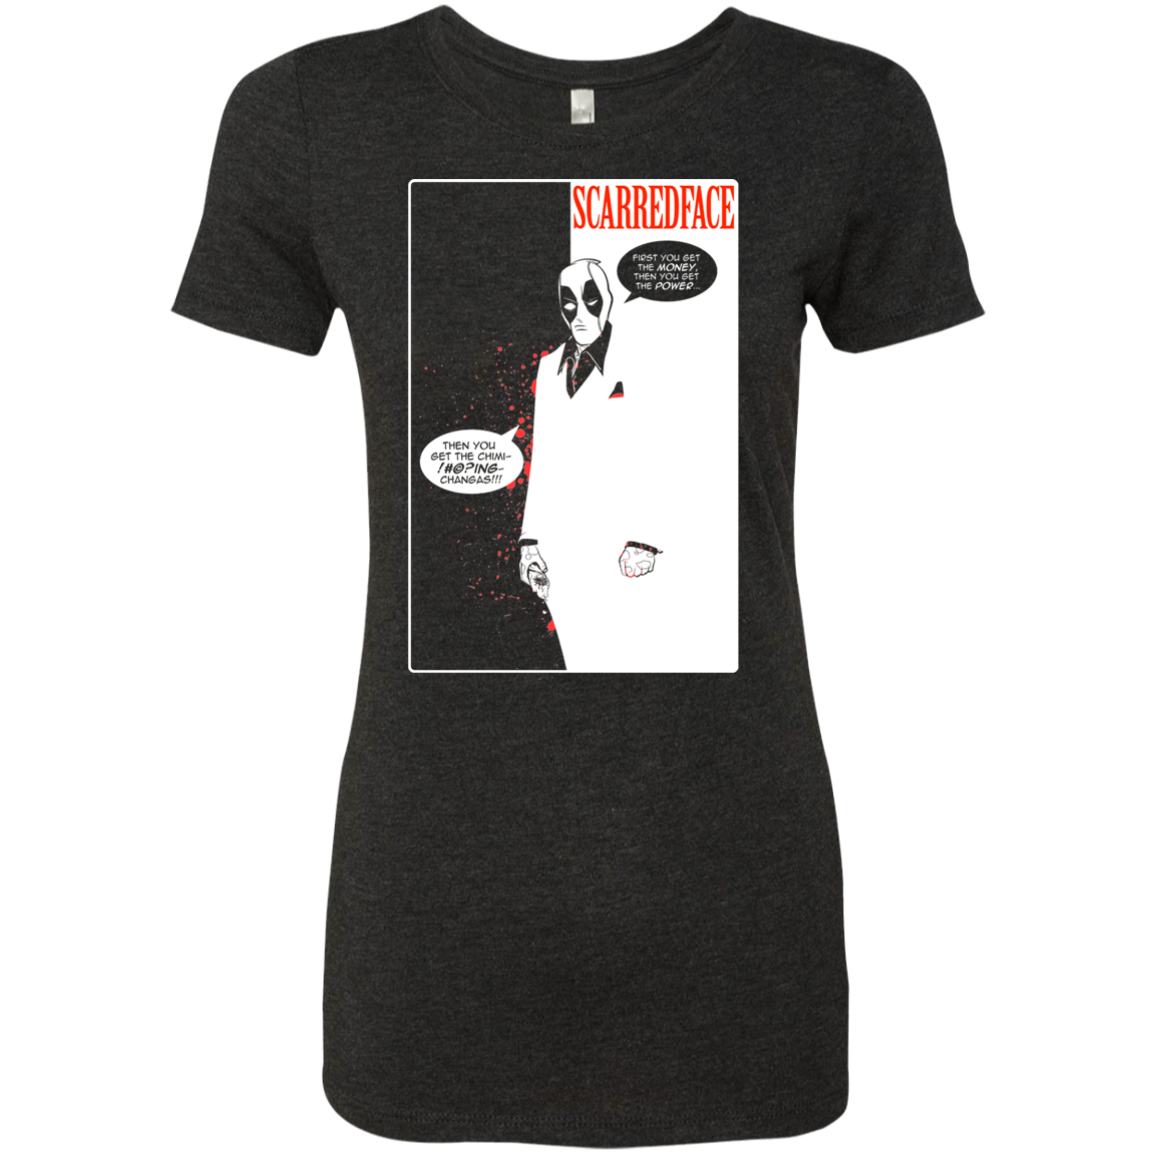 SCARREDFACE Women's Triblend T-Shirt